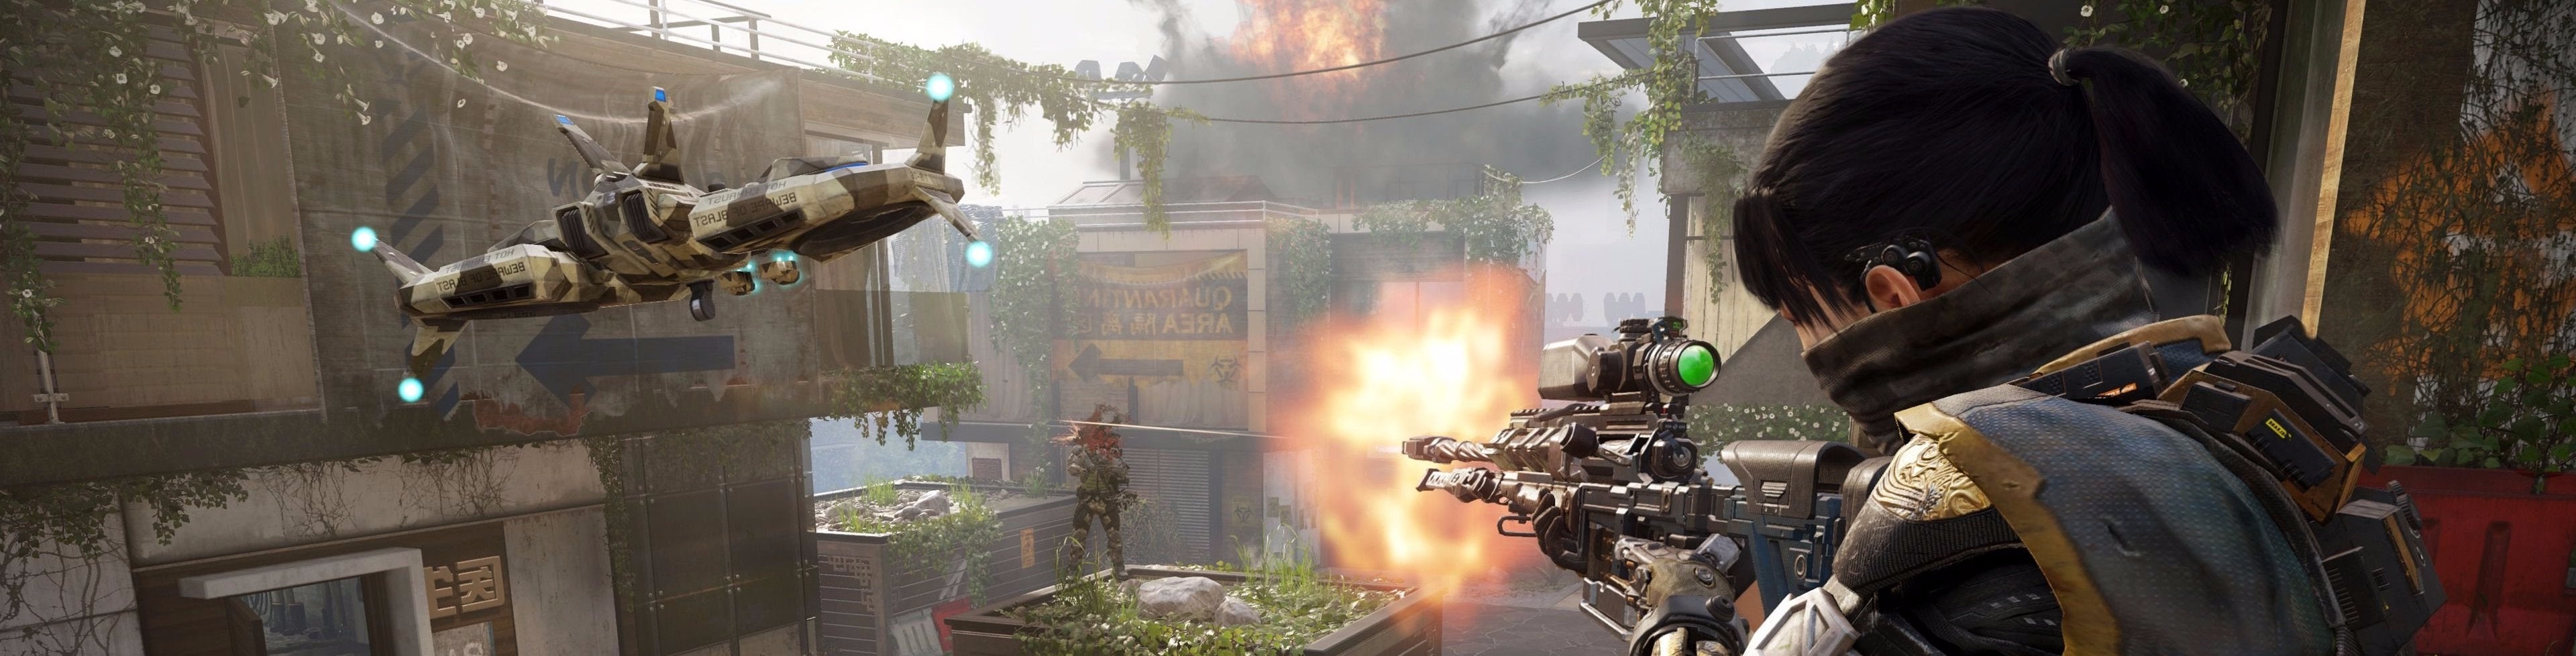 Immagine di Call of Duty Black Ops III - prova